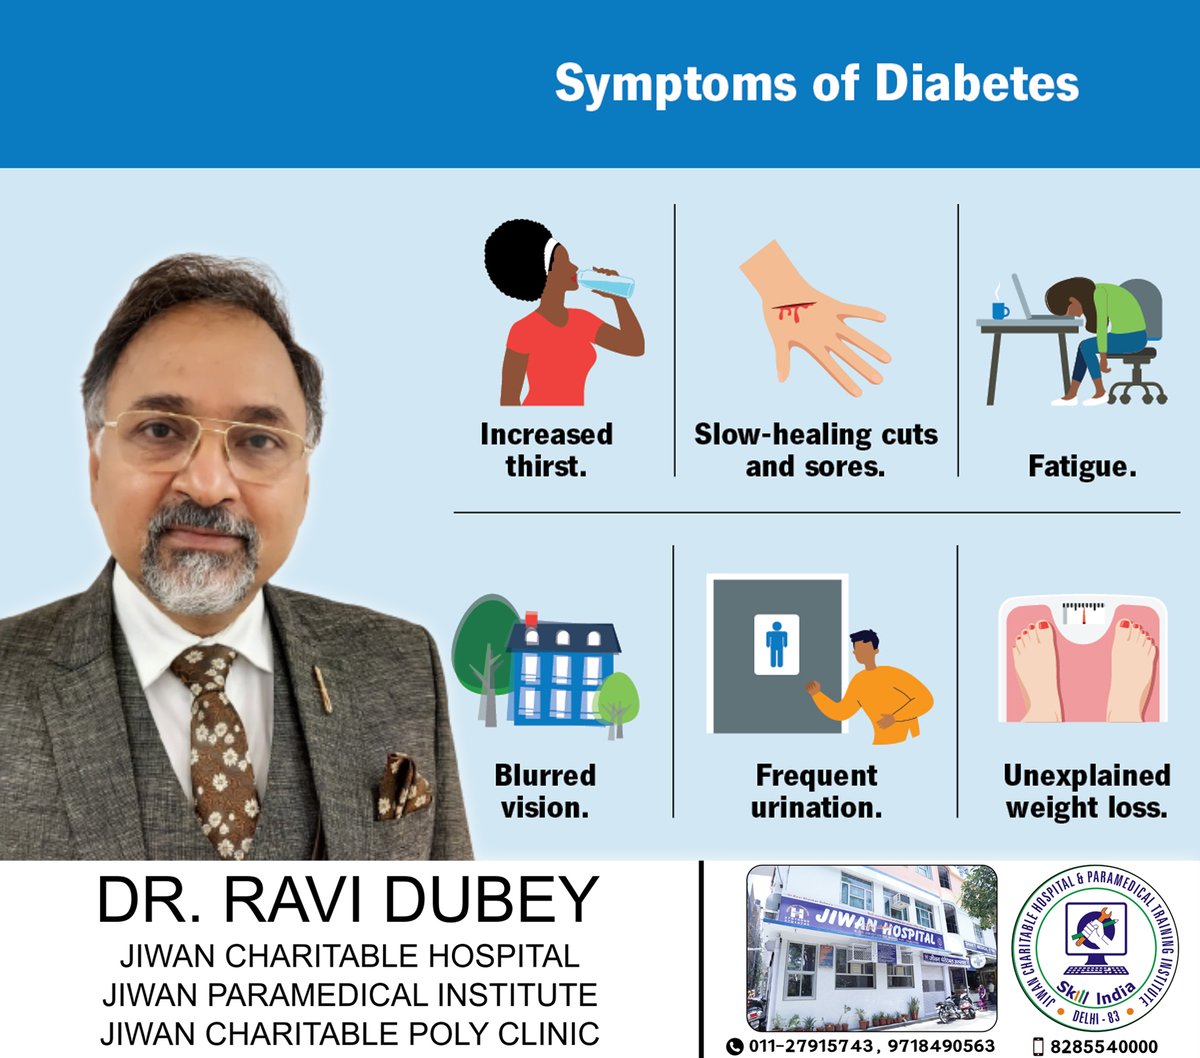 Symptoms of Diabetes - Jiwan Charitable Hospital
Address: R-225-230, Mangol puri, Delhi, India
Call us: 011-27916689, 27915743
#jiwancharitablehospital #hospitalpharmacy #drravidubey #healthcare #medical #doctors #mangolpuridelhi #nursinghome #diabetes #sugar #treatmentplanning